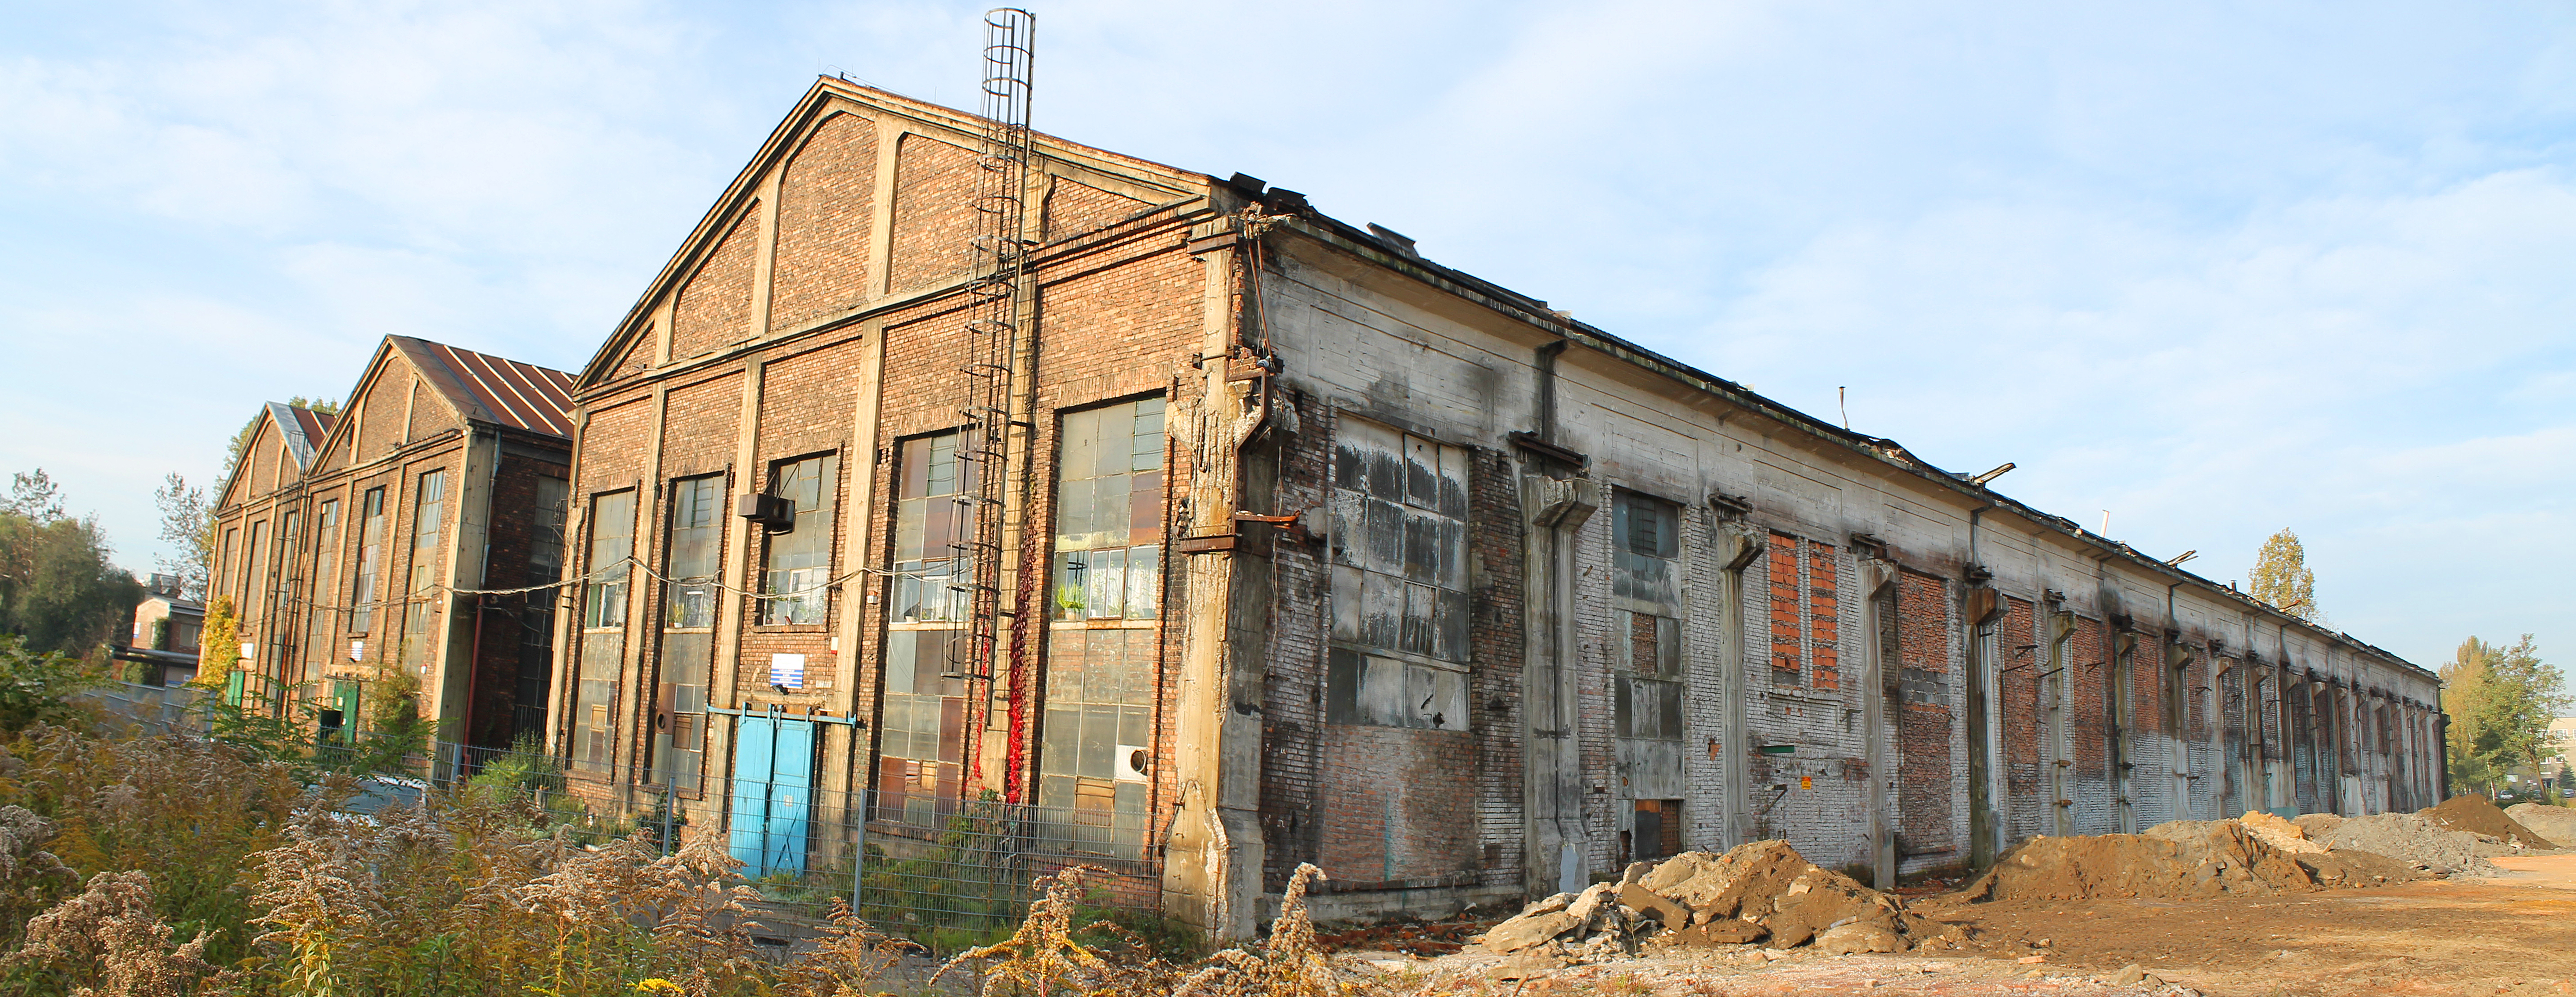 Old Warehouse exterior #00002 - CC Free Stock by PeterKmiecik on DeviantArt